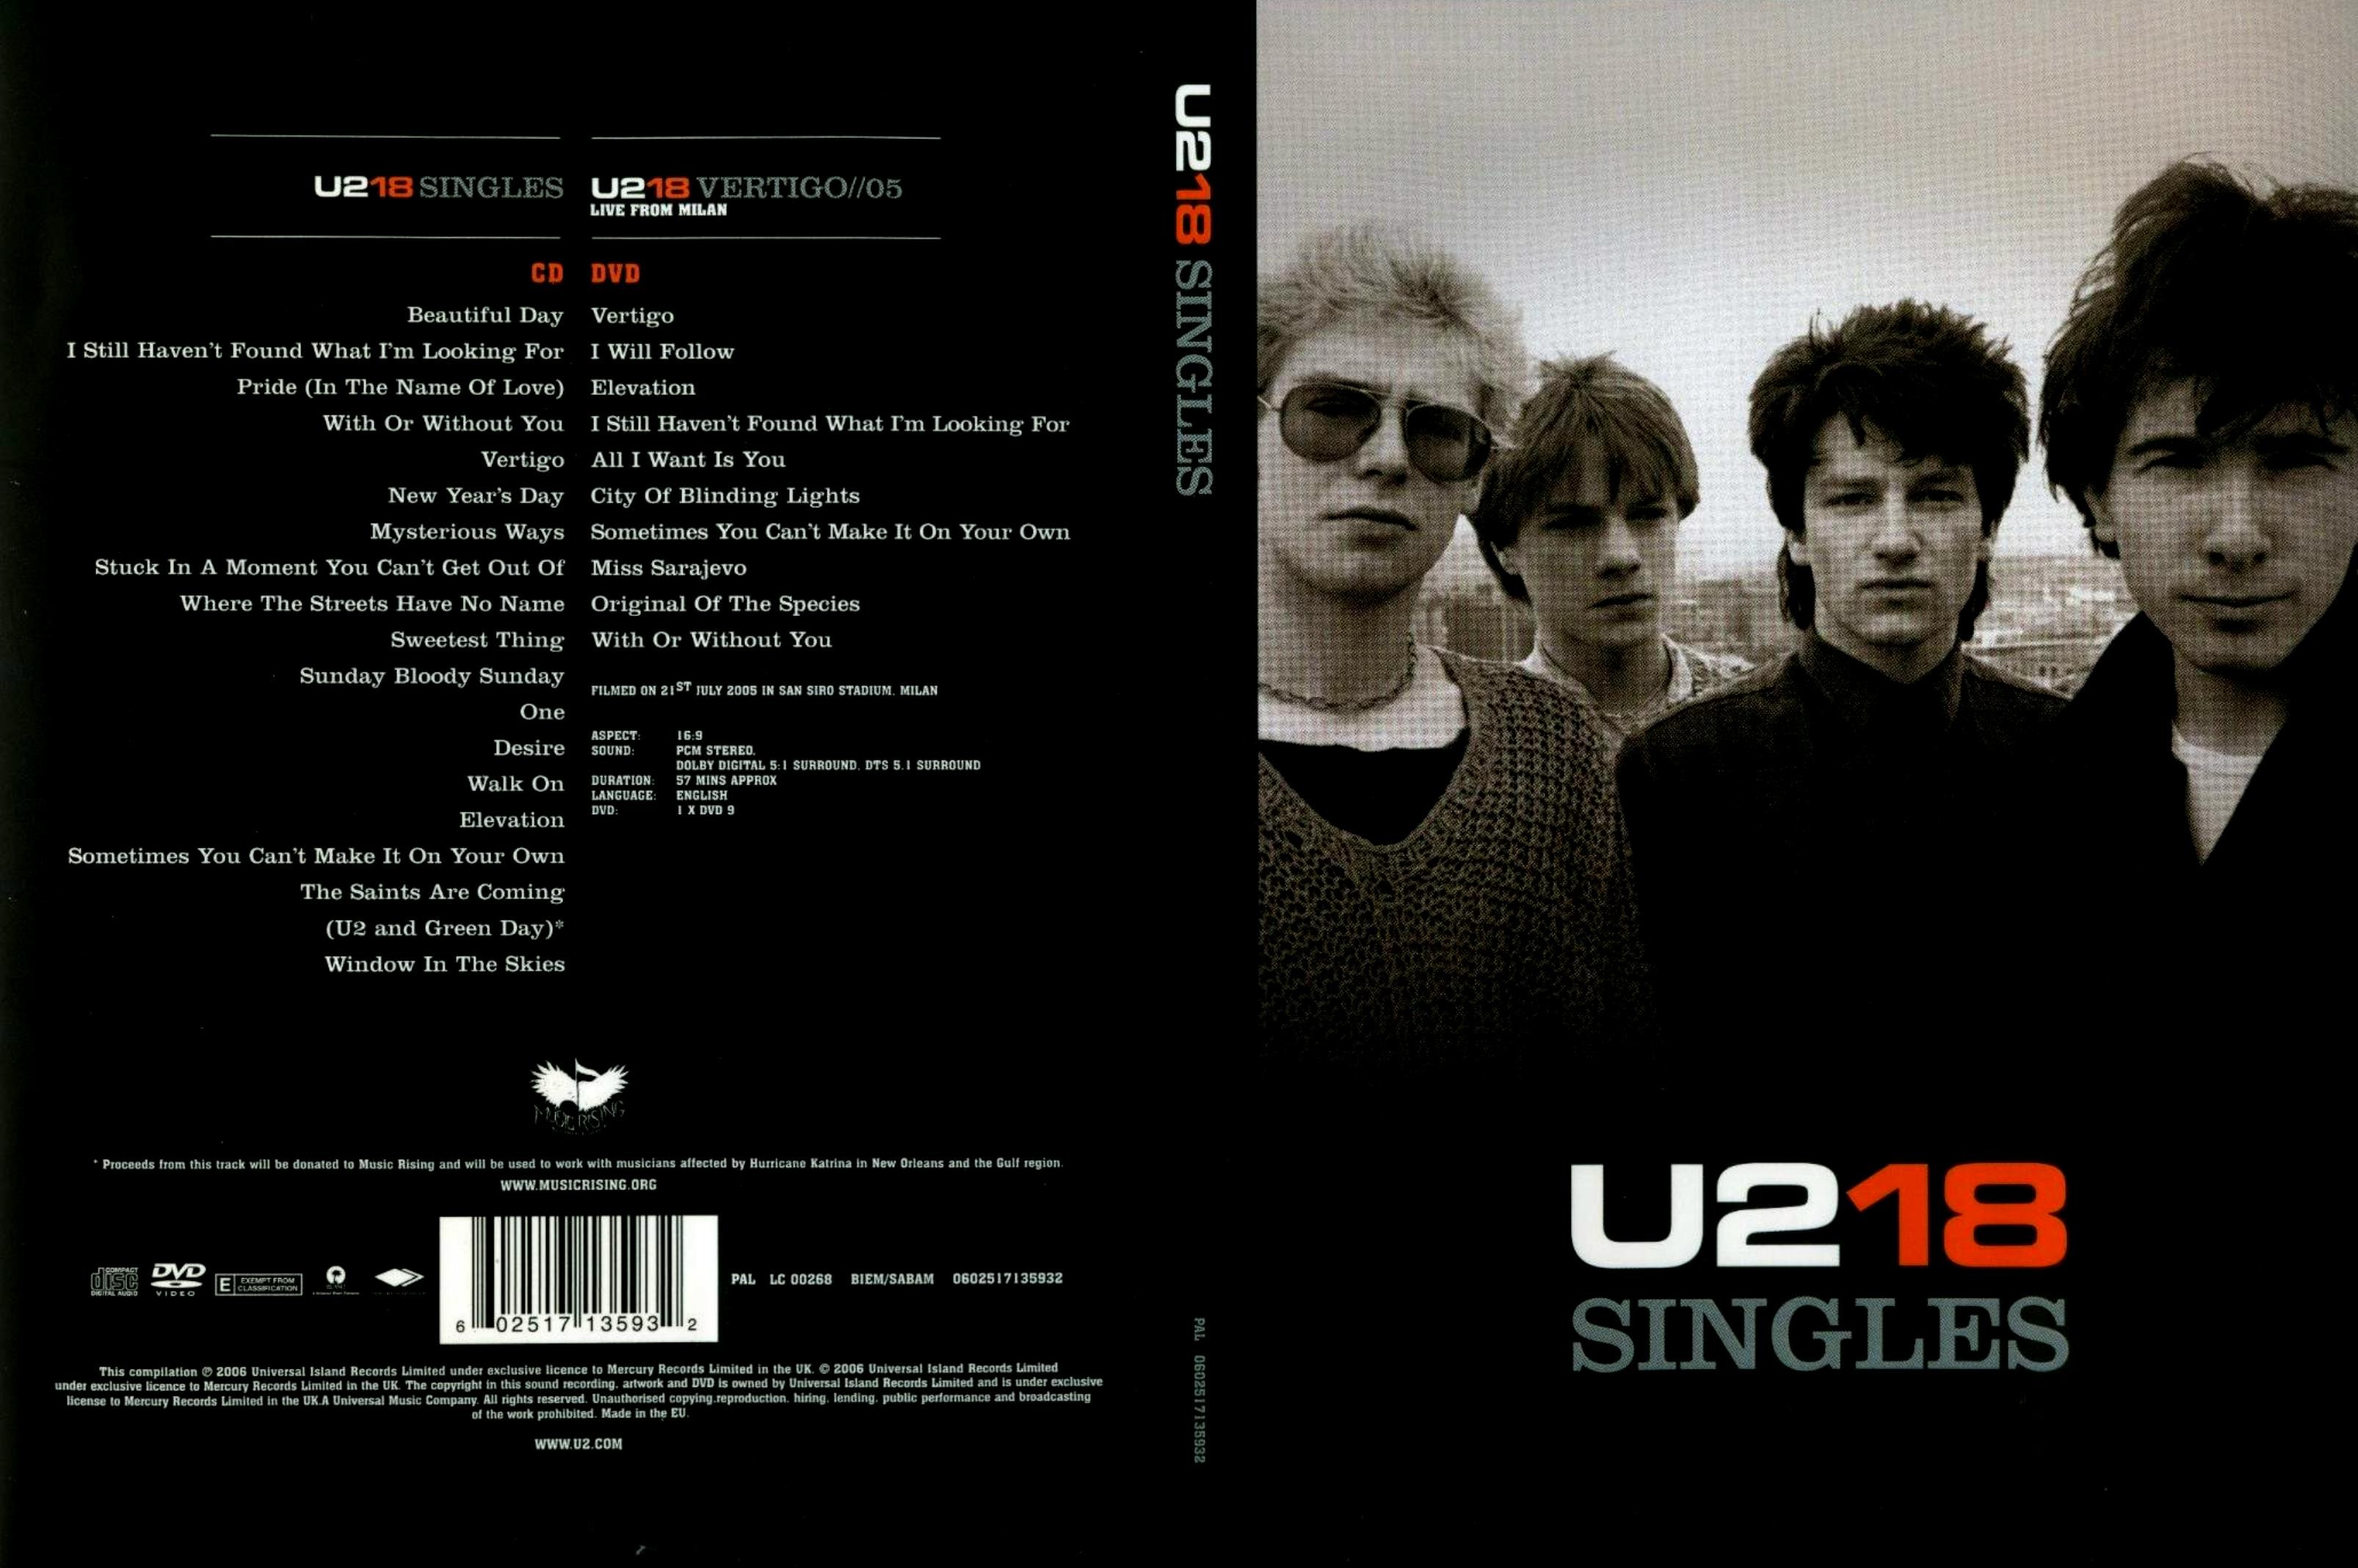 Jaquette DVD U2 18 Singles